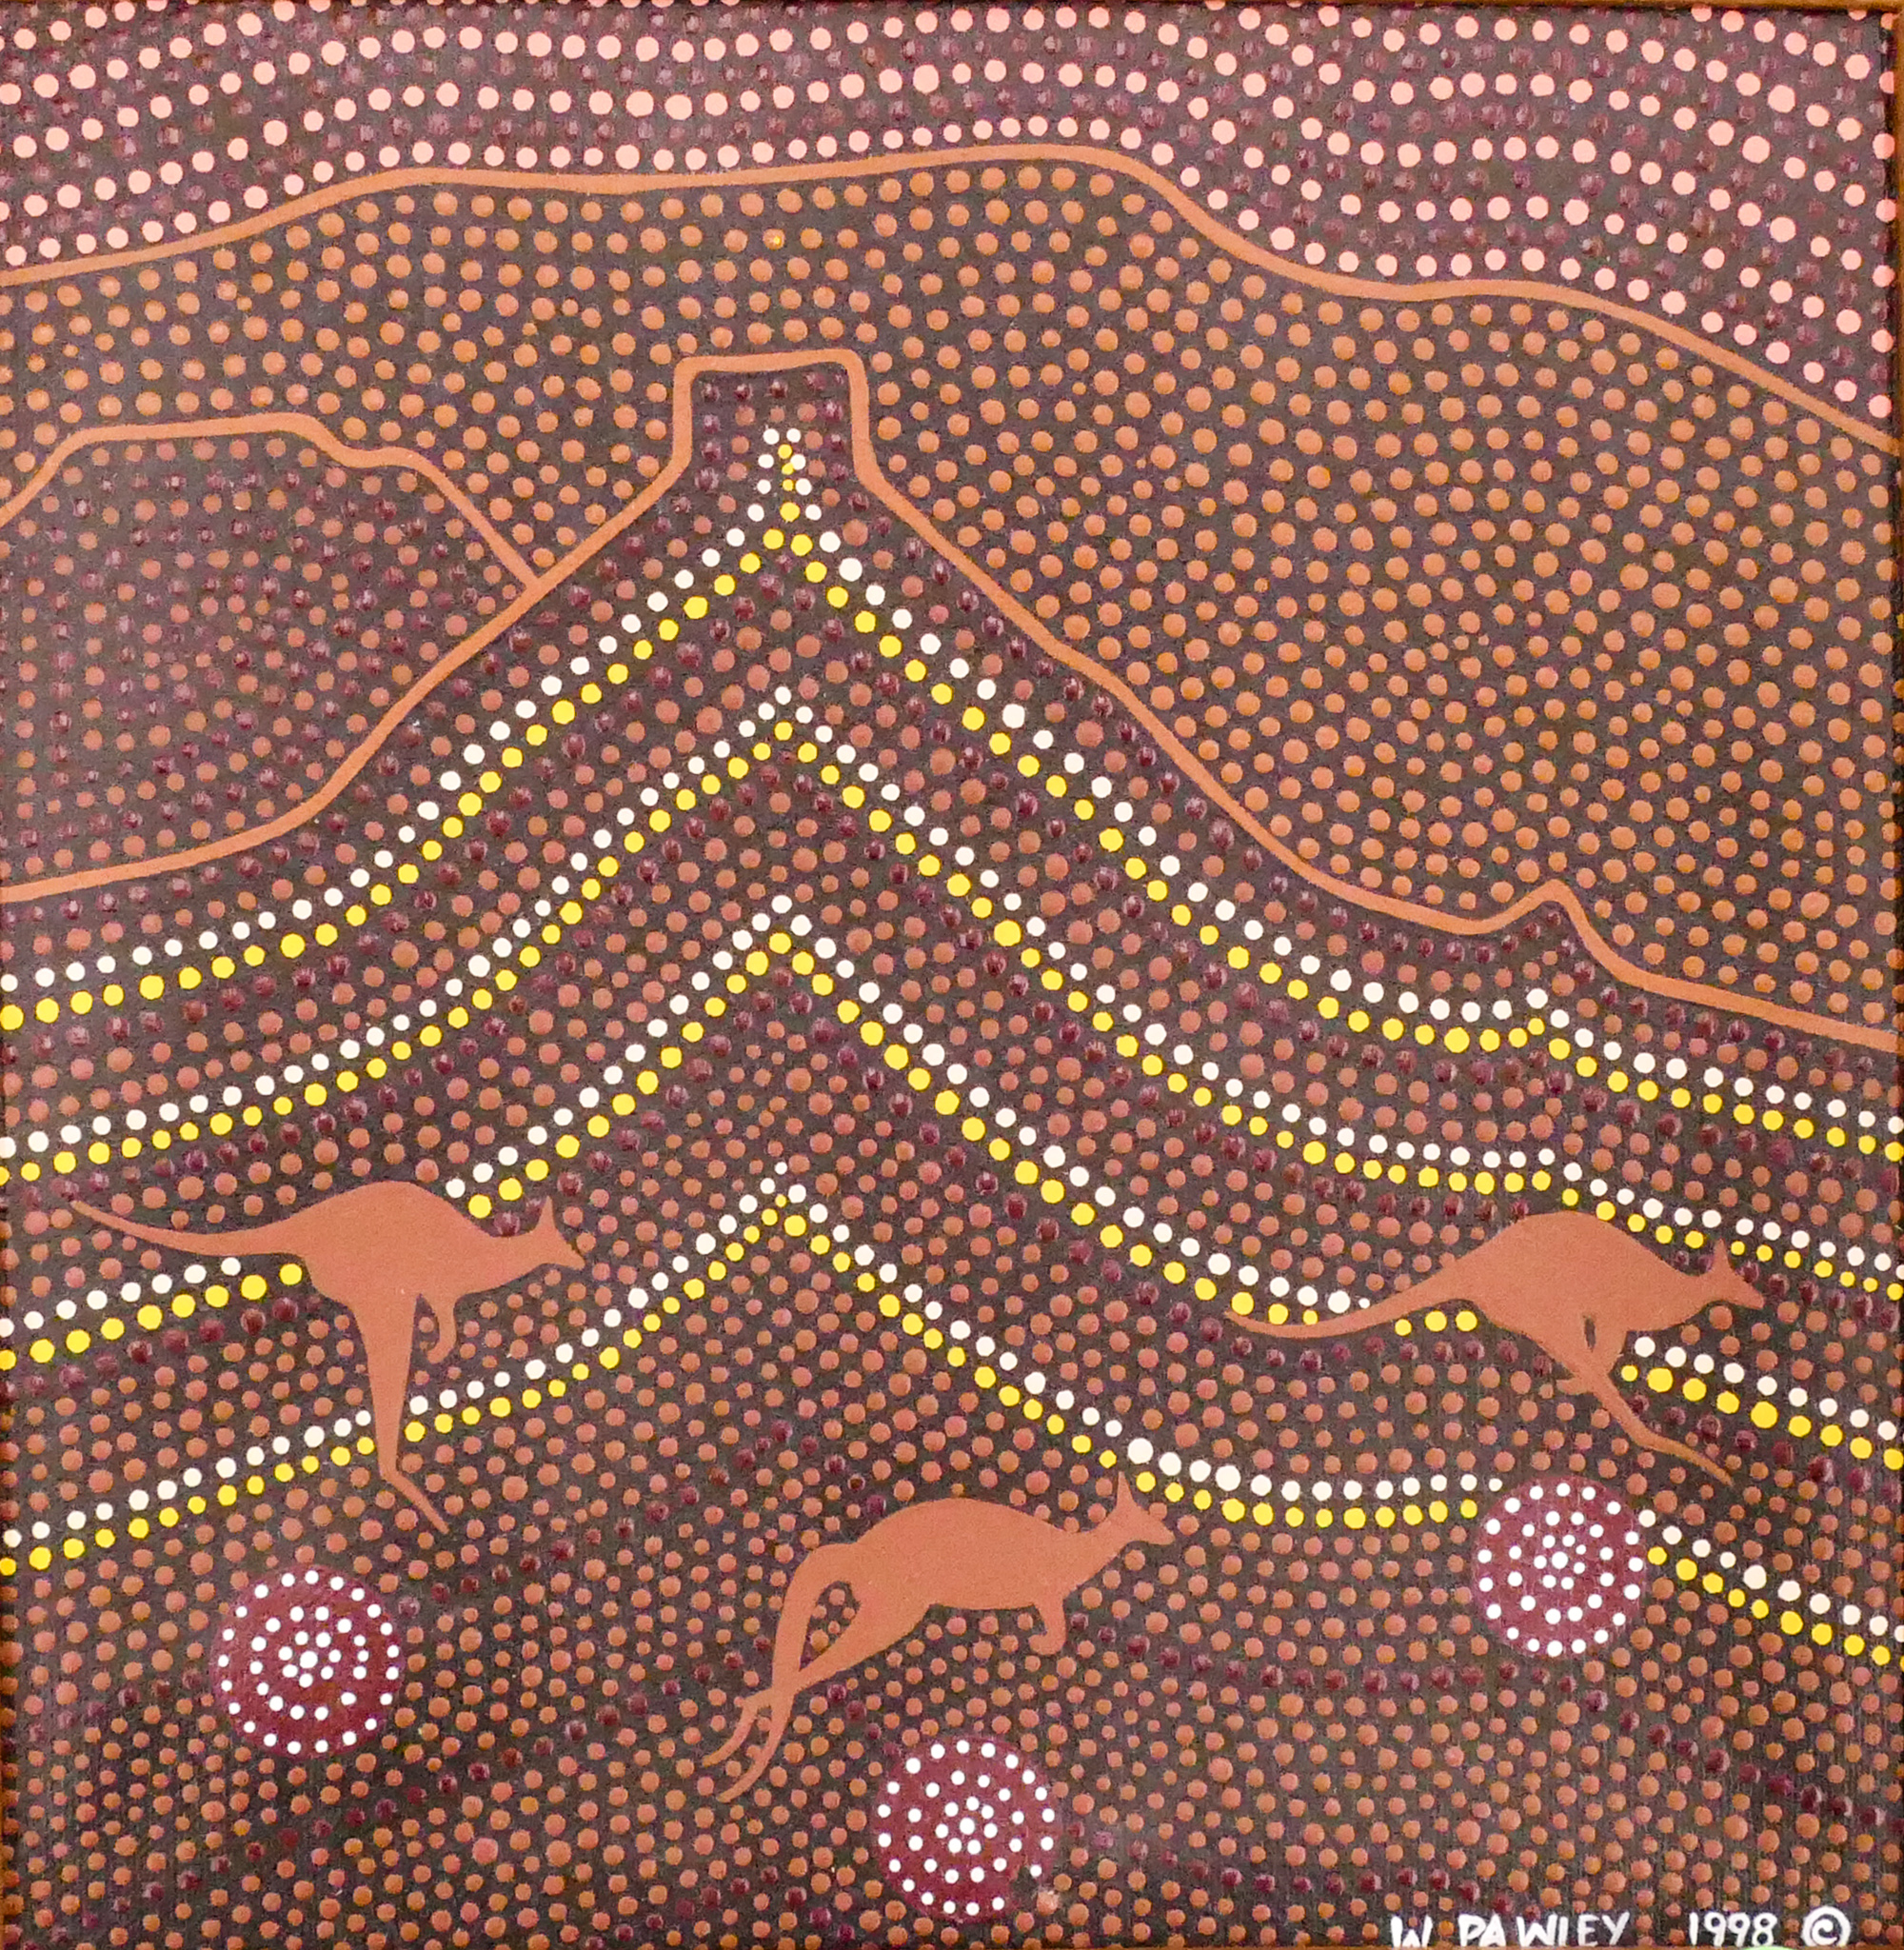 Wendy Pawley Koori Aboriginal Oil 2d628e